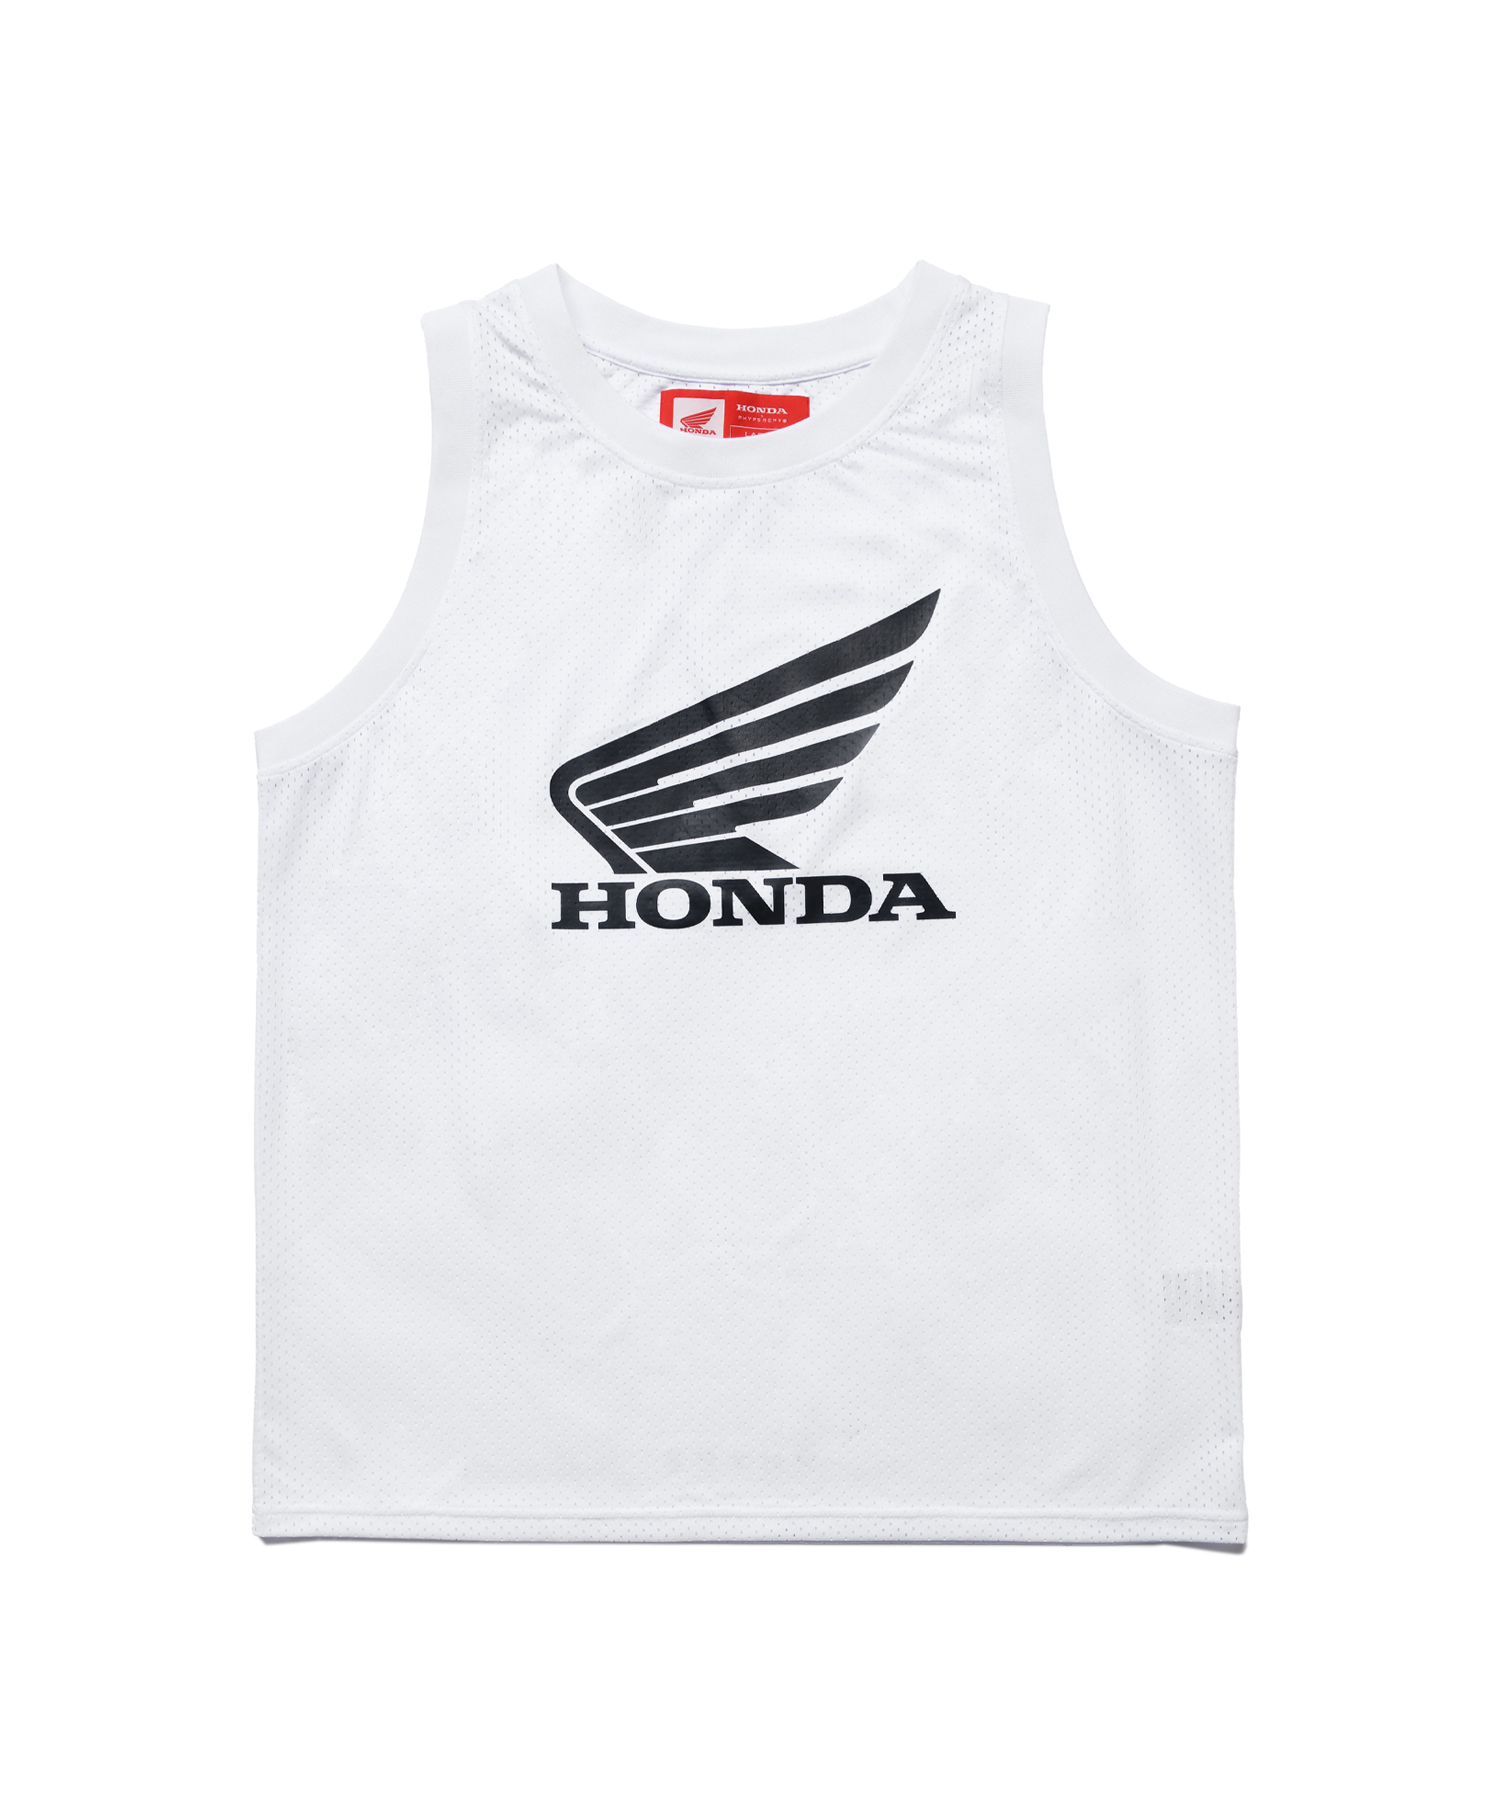 Honda Original Wing logo Mesh Sleeveless White